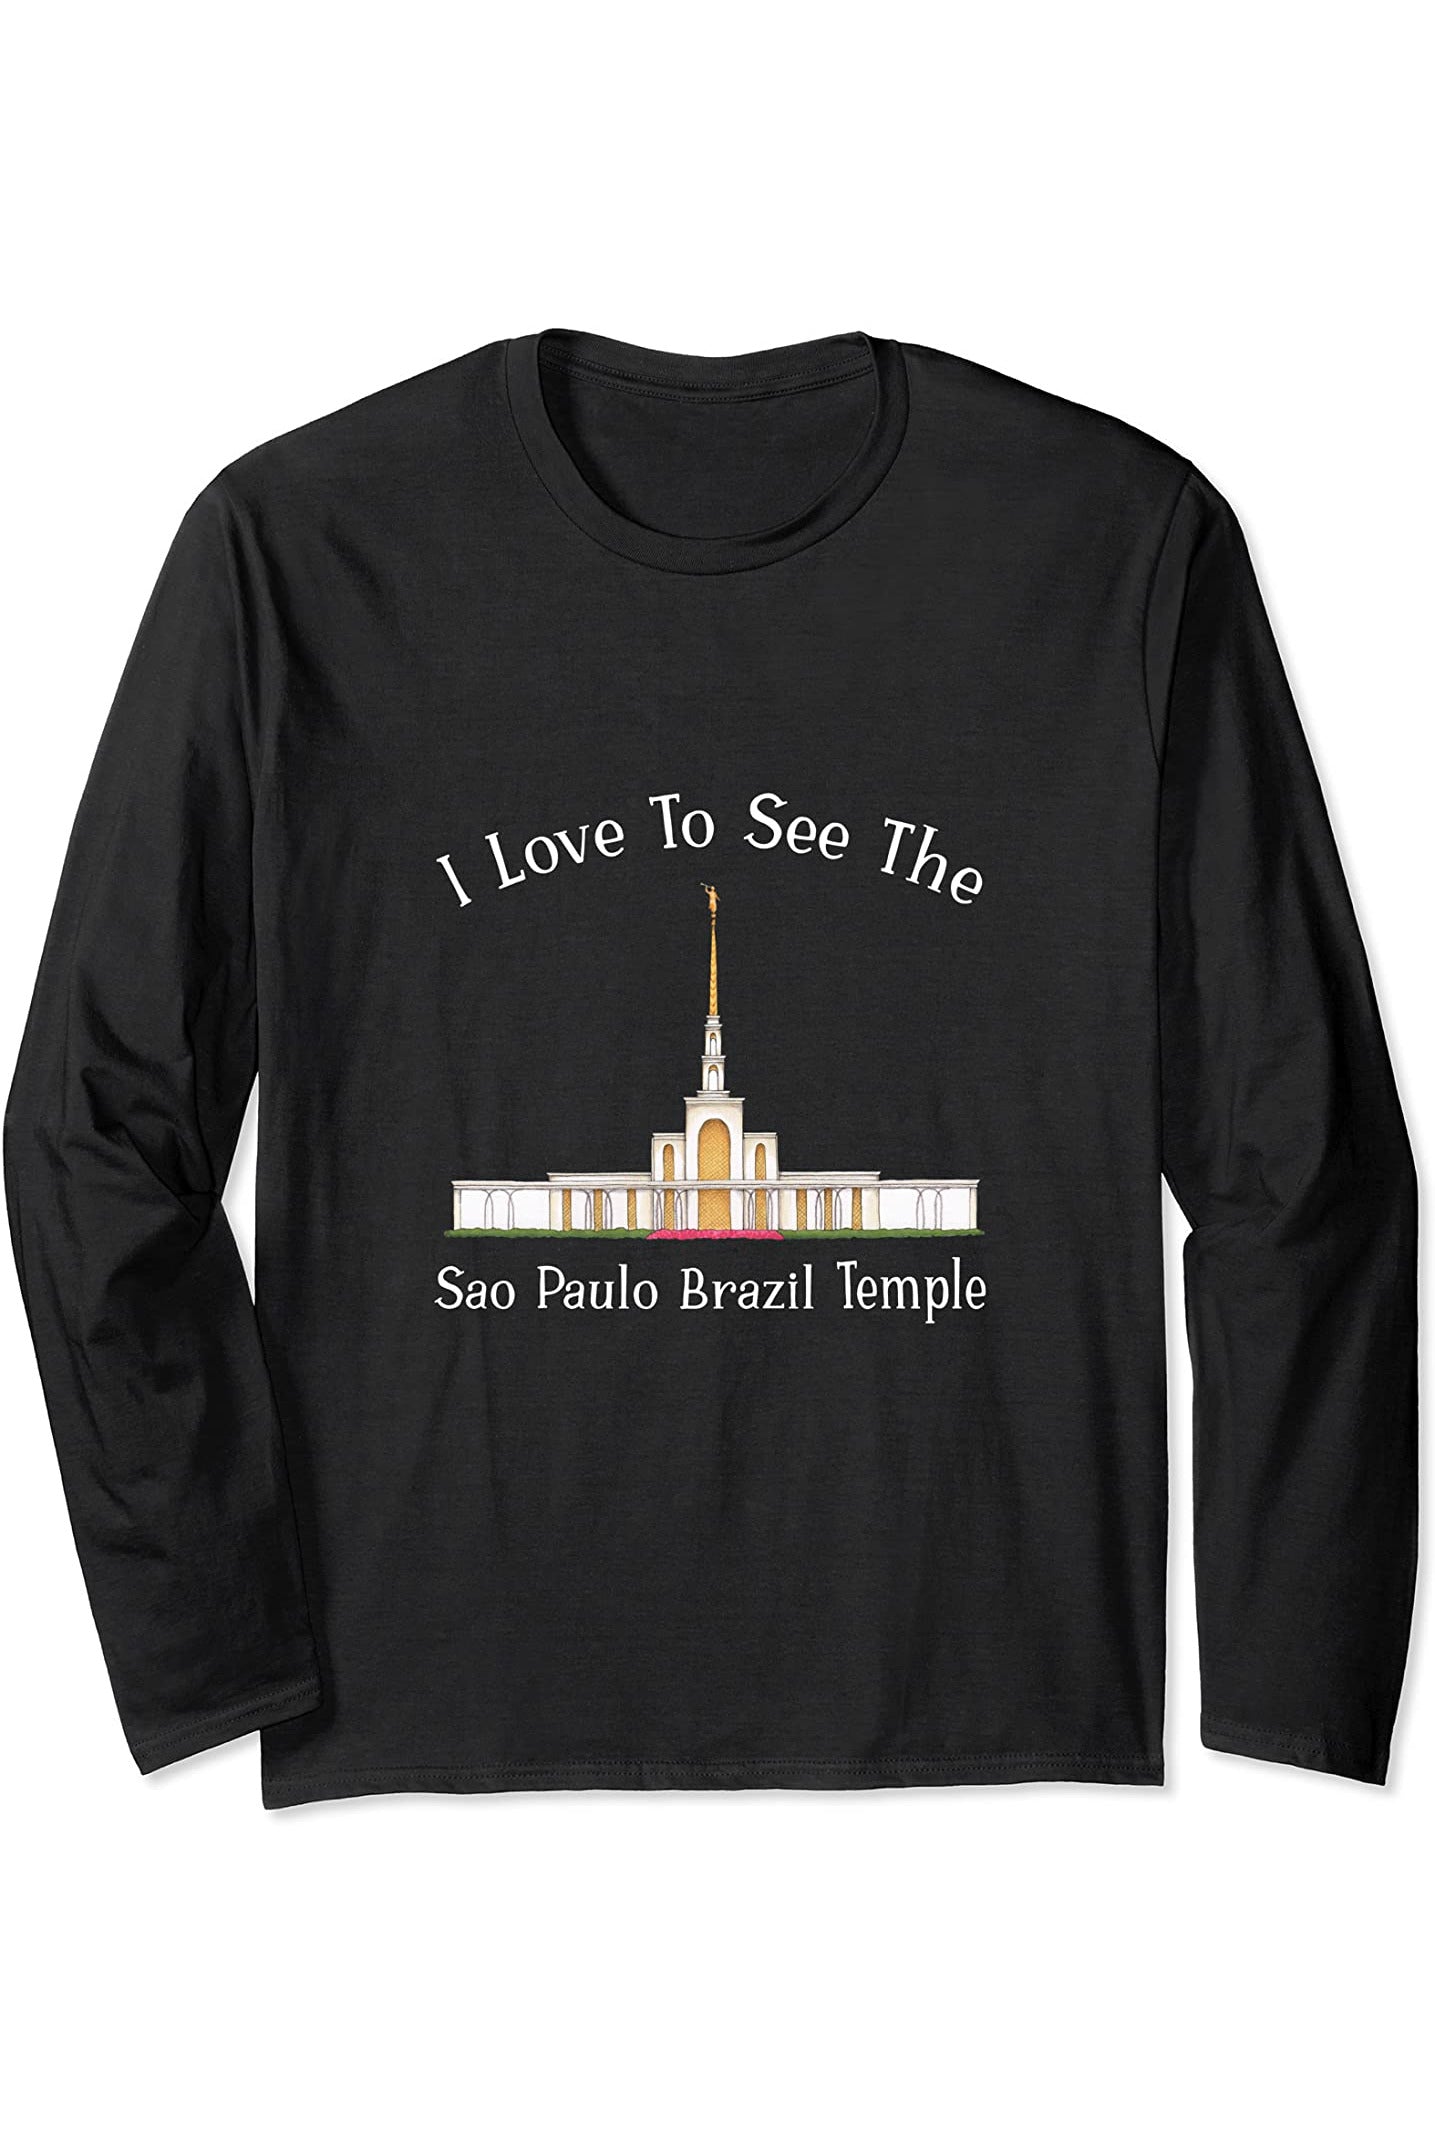 Sao Paulo Brazil Temple Long Sleeve T-Shirt - Happy Style (English) US